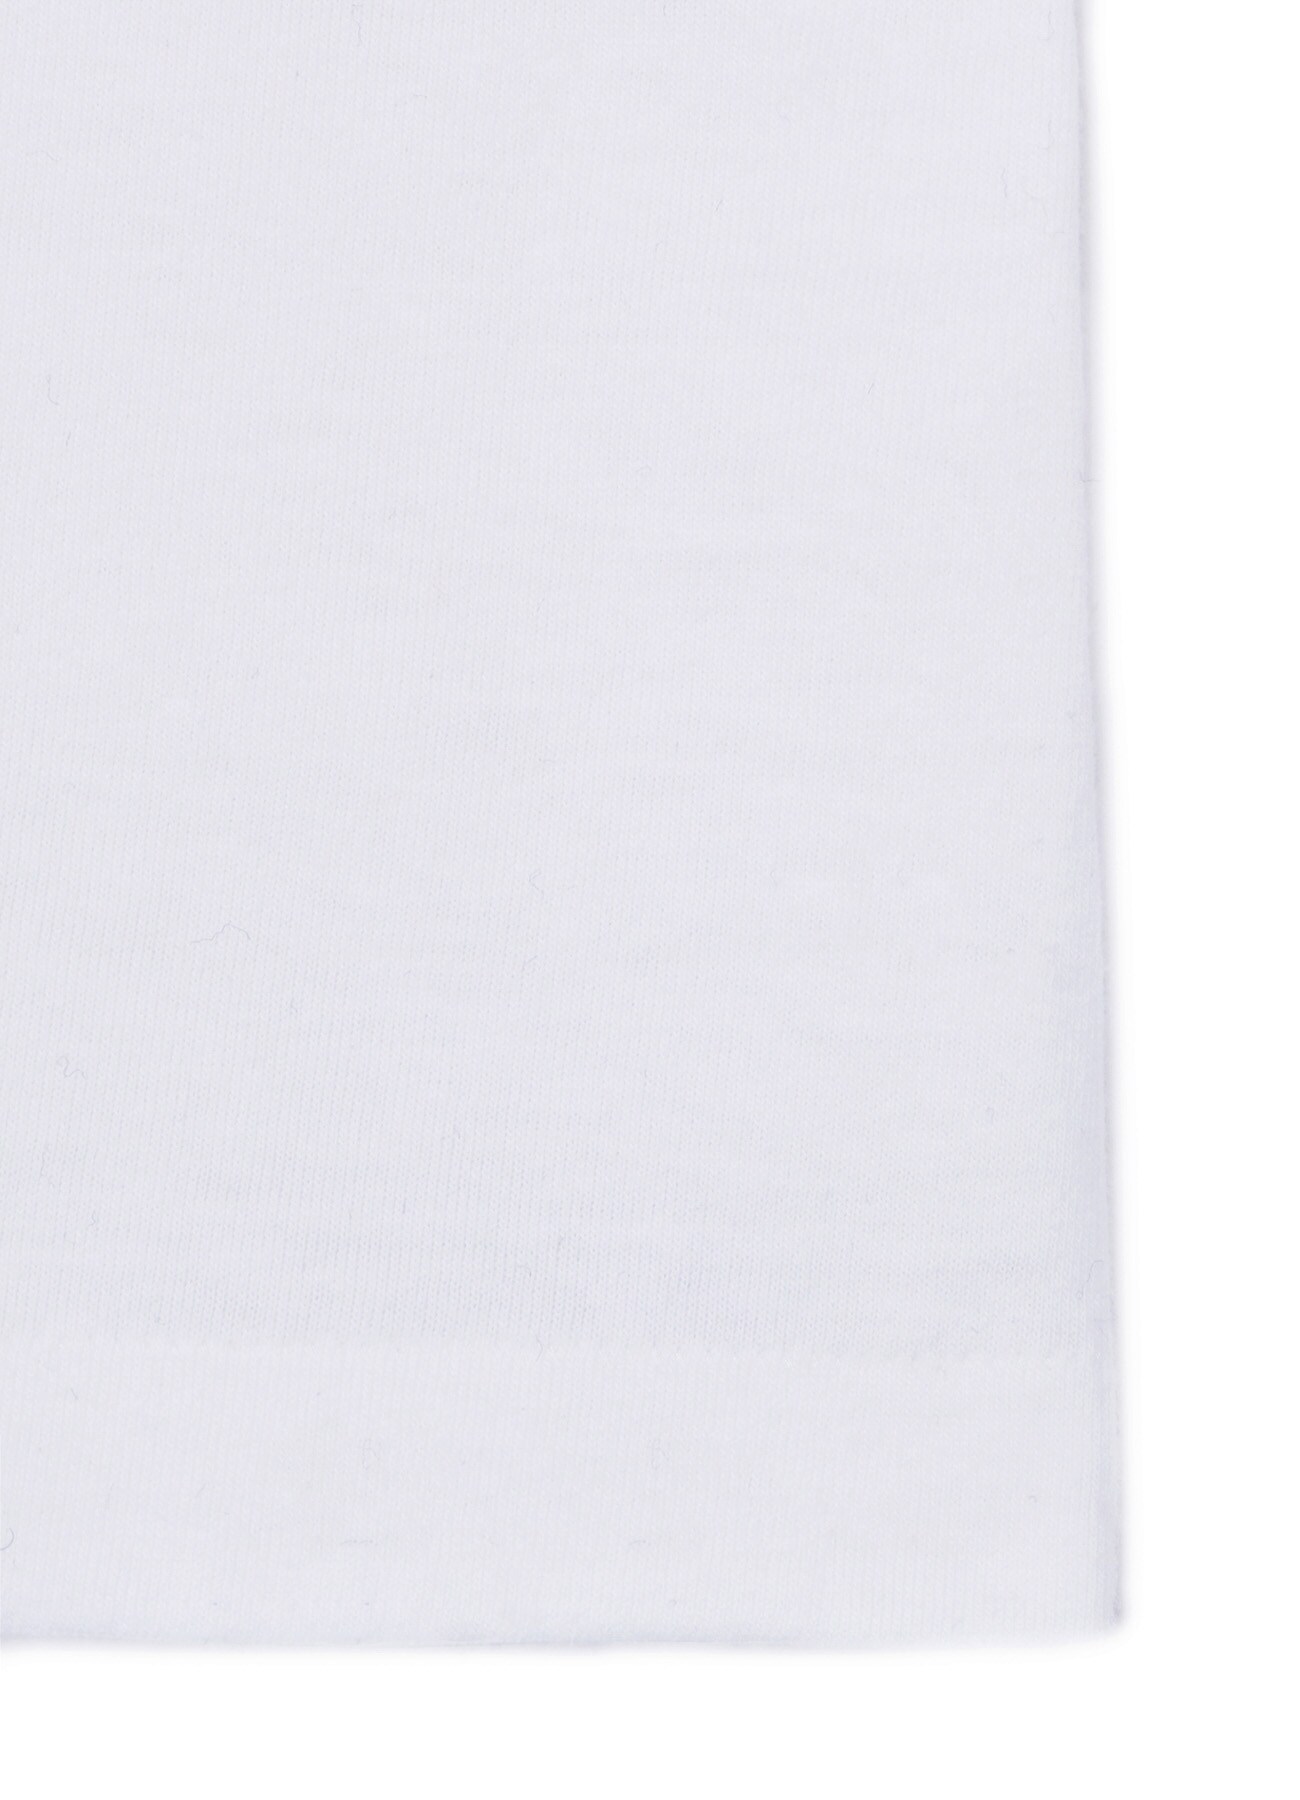 Cotton Jersey Splash Paint Print Long-Sleeved T-Shirt